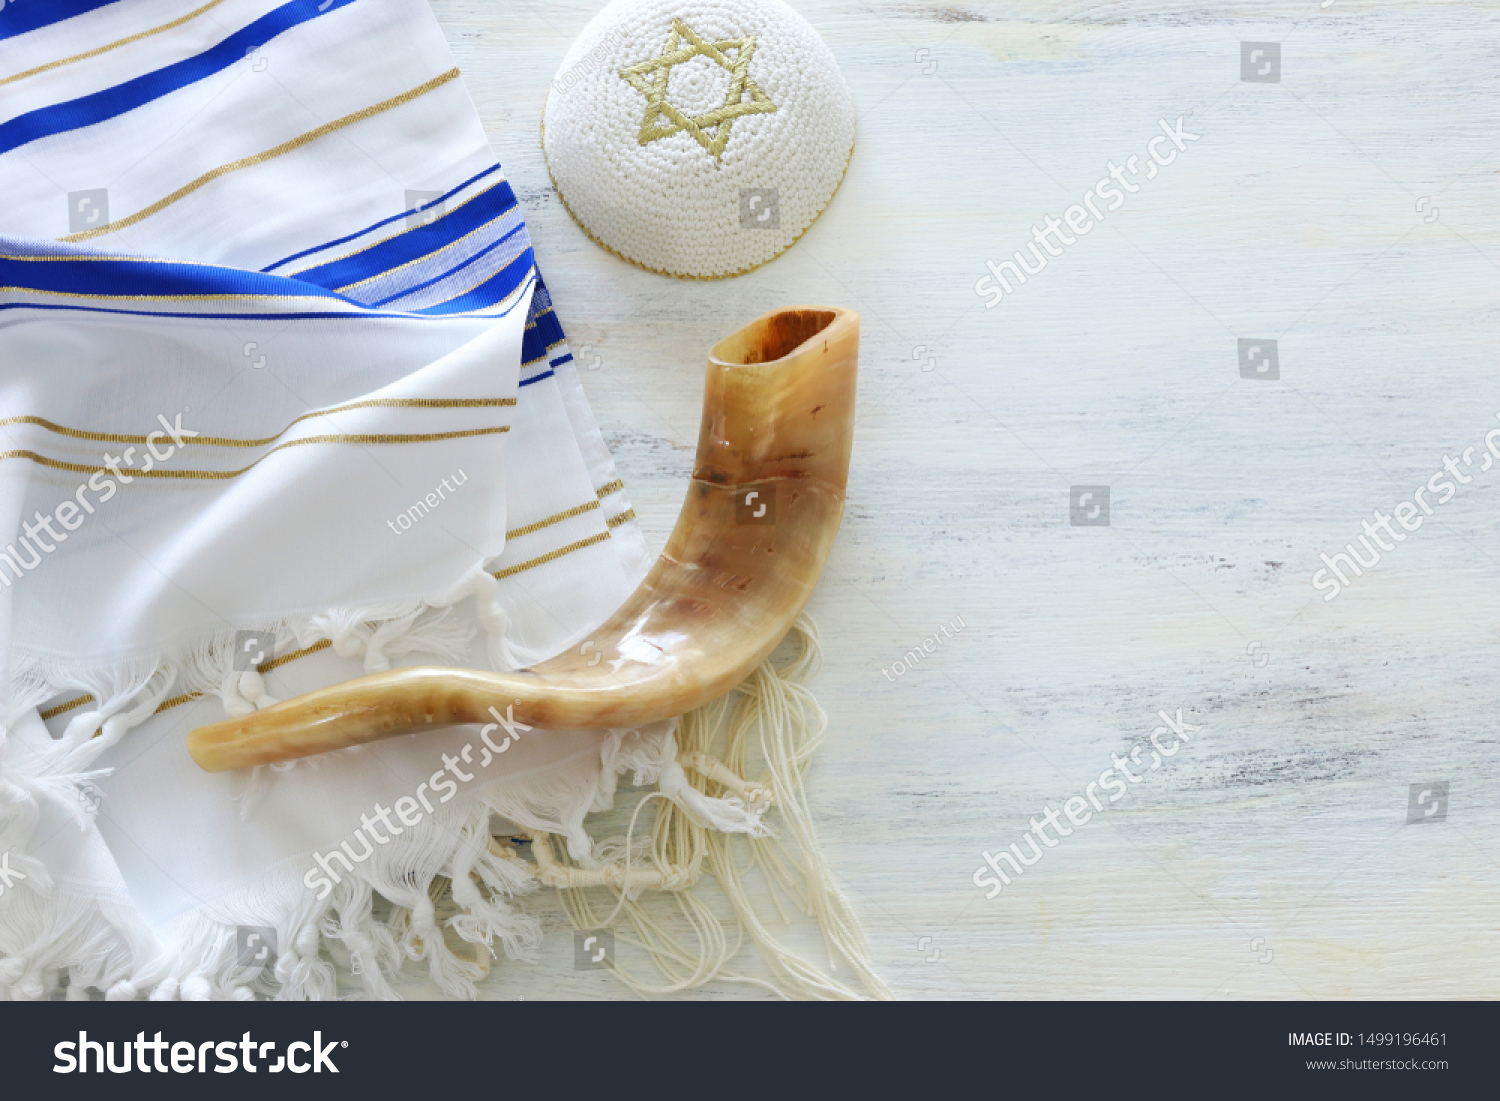 religion image of Prayer Shawl - Tallit, Prayer book and Shofar (horn) jewish religious symbols. Rosh hashanah (jewish New Year holiday), Shabbat and Yom kippur concept. #1499196461